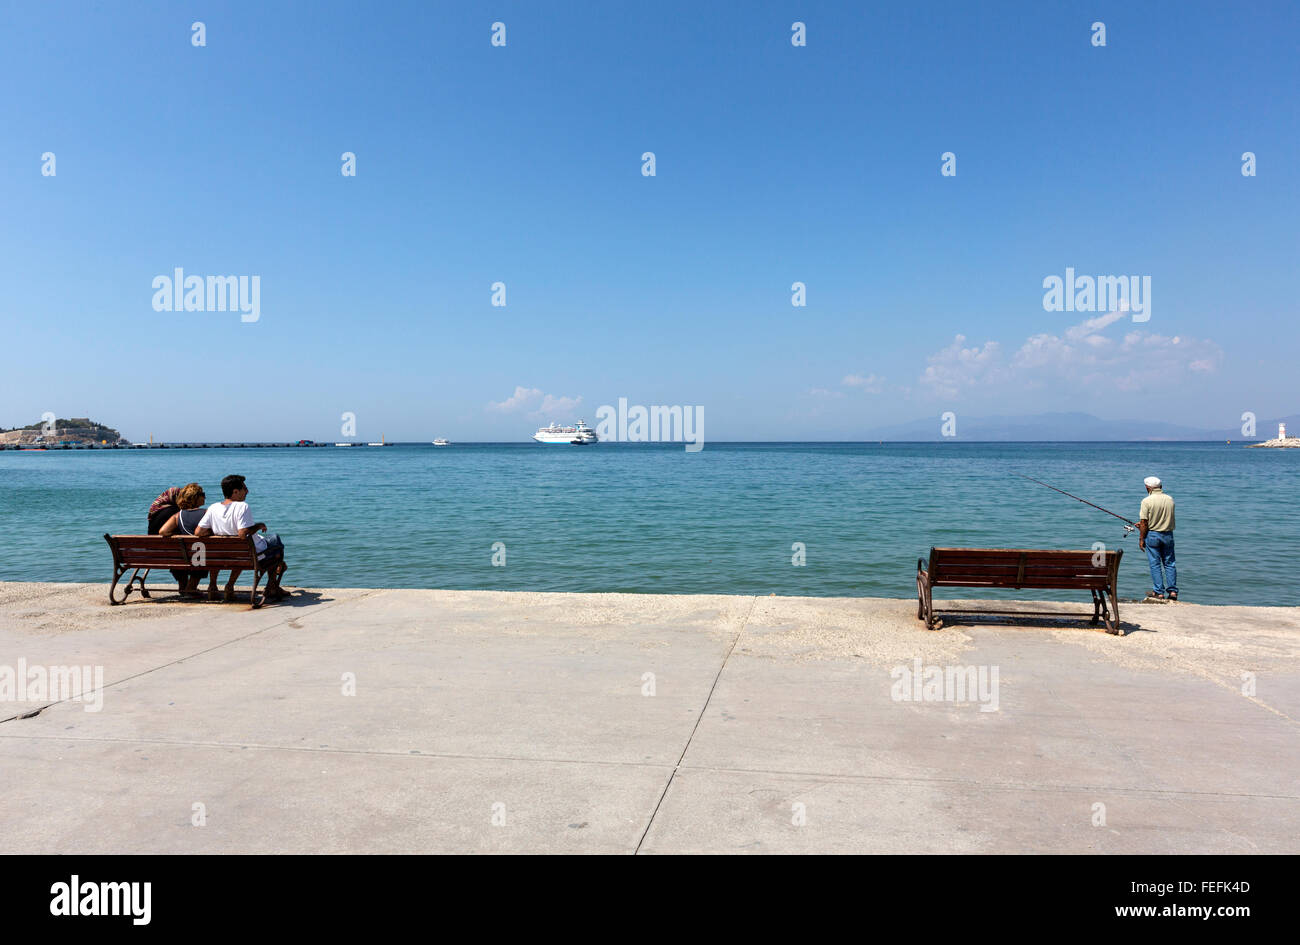 Family looking a man fishing in the Aegean sea in the Promenade in Atatürk Boulevard looking the in Kuşadası,  Turkey Stock Photo